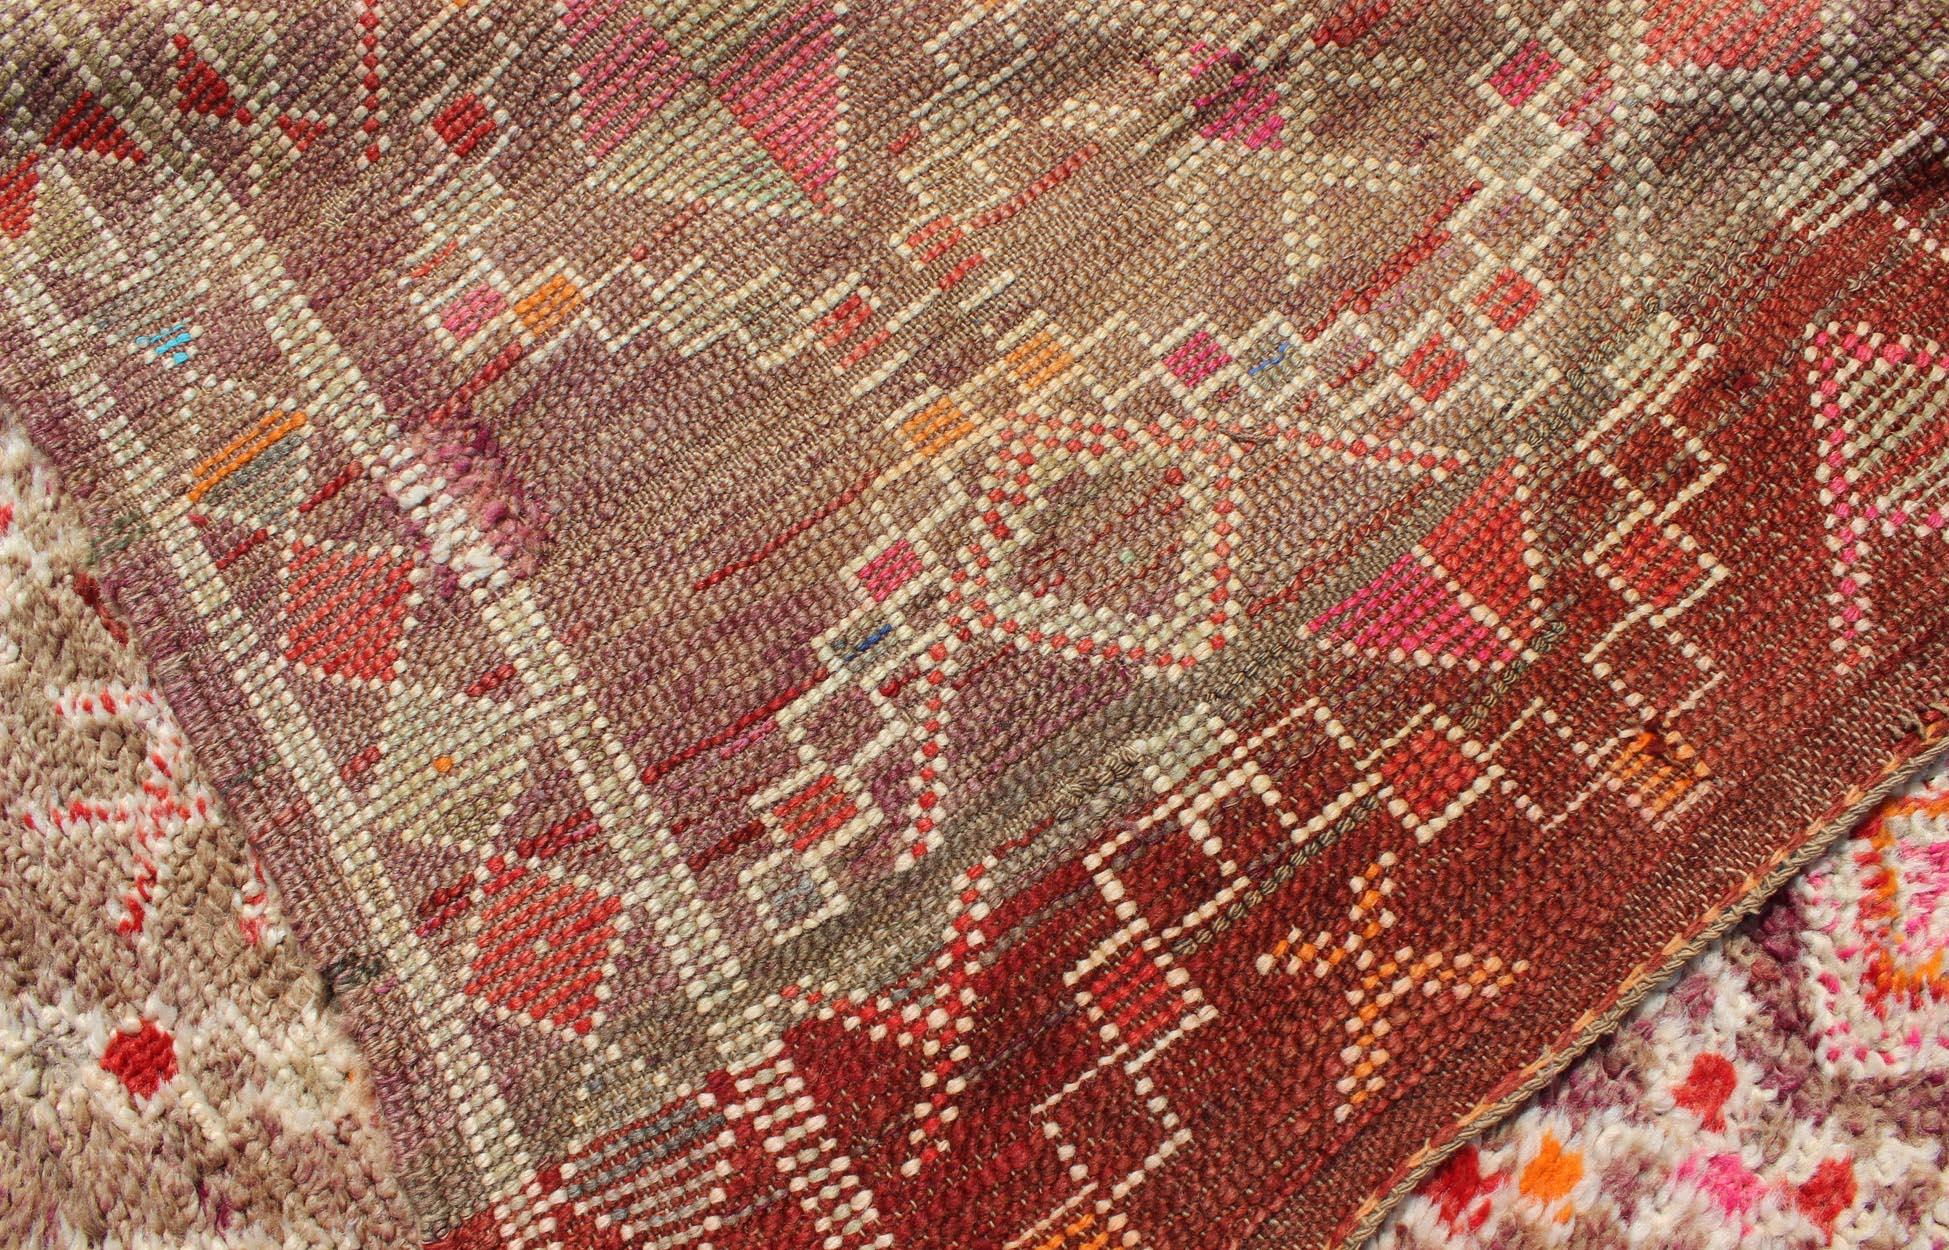 Tribal Design Vintage Moroccan Rug in Orange, Red, Green, and Lt Brown For Sale 5